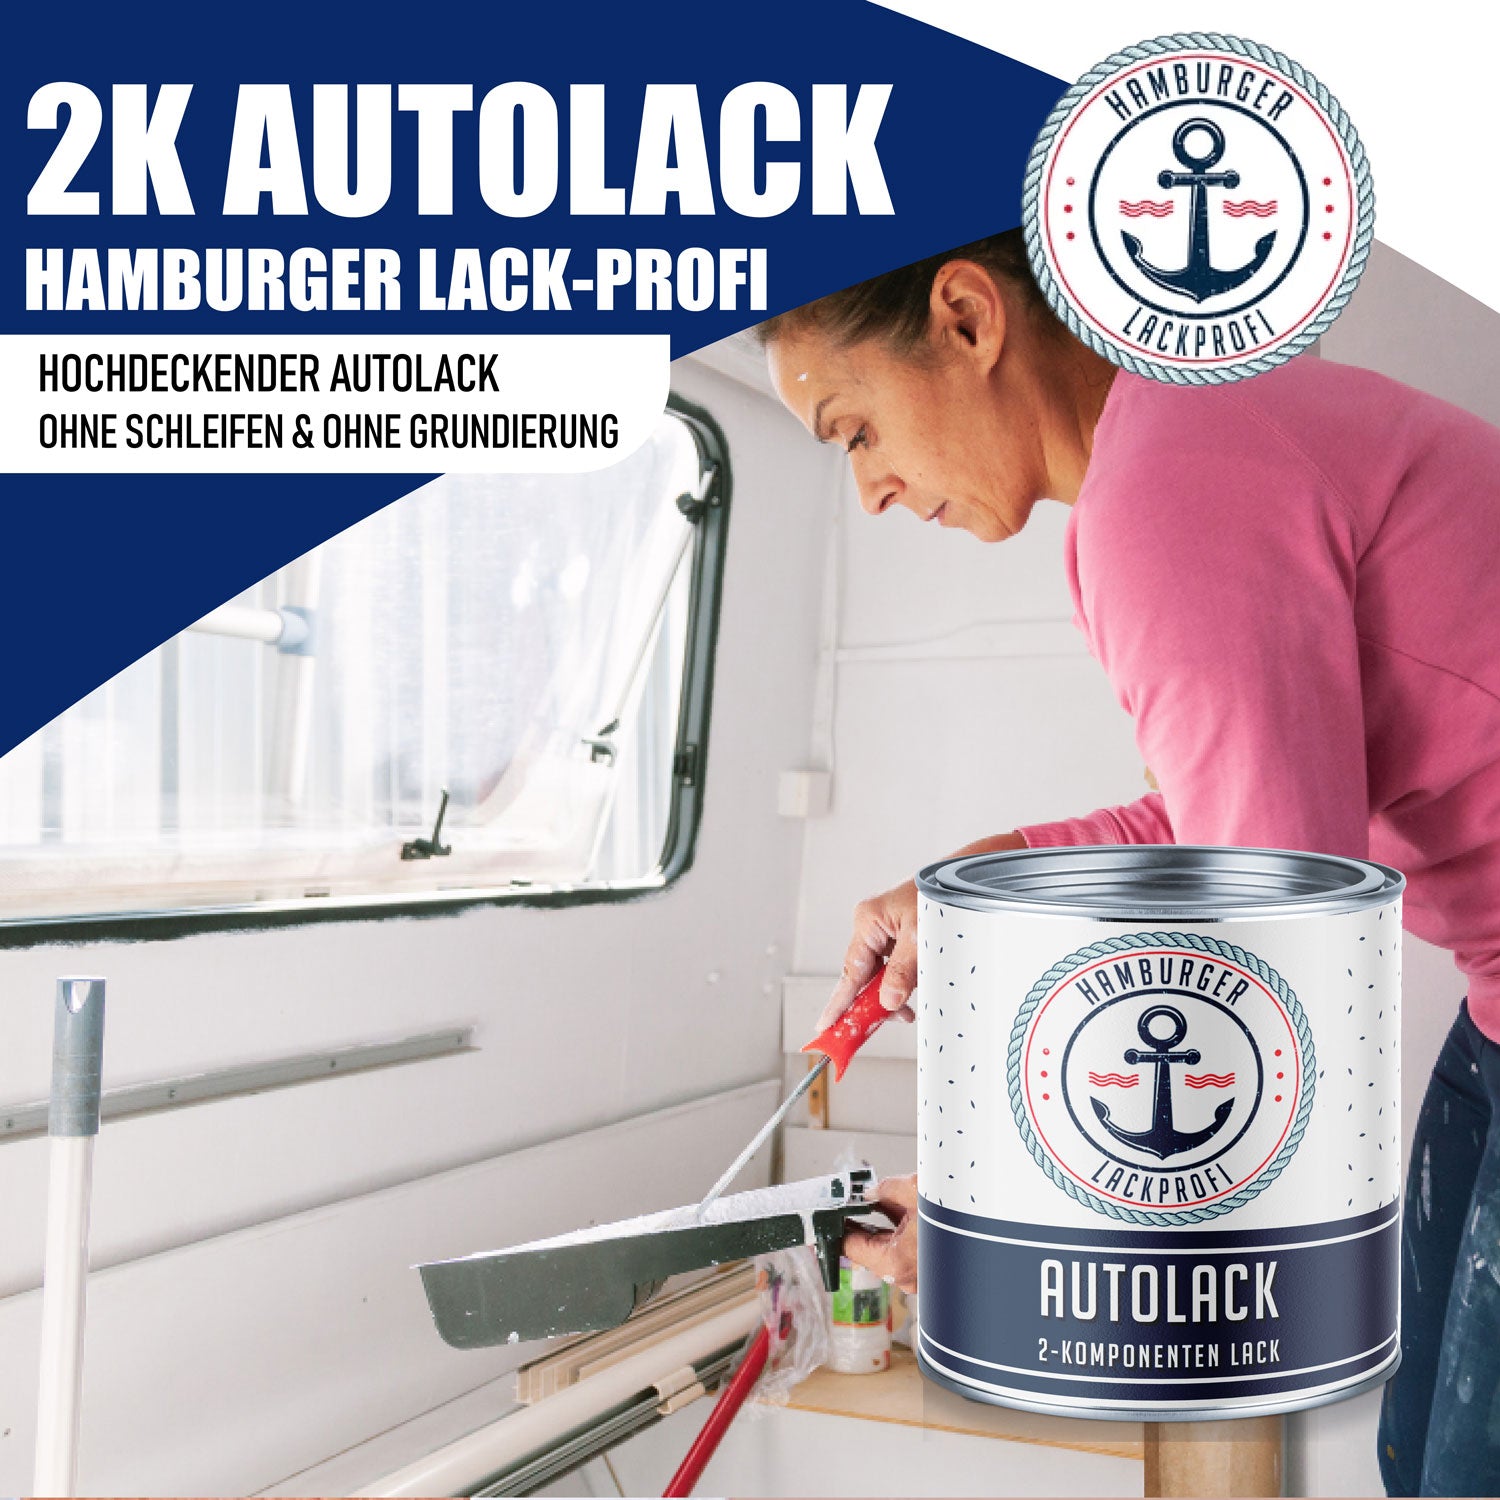 Hamburger Lack-Profi 2K Autolack in RAL 1002 Sandgelb mit Lackierset (X300) & Verdünnung (1 L) - 30% Sparangebot